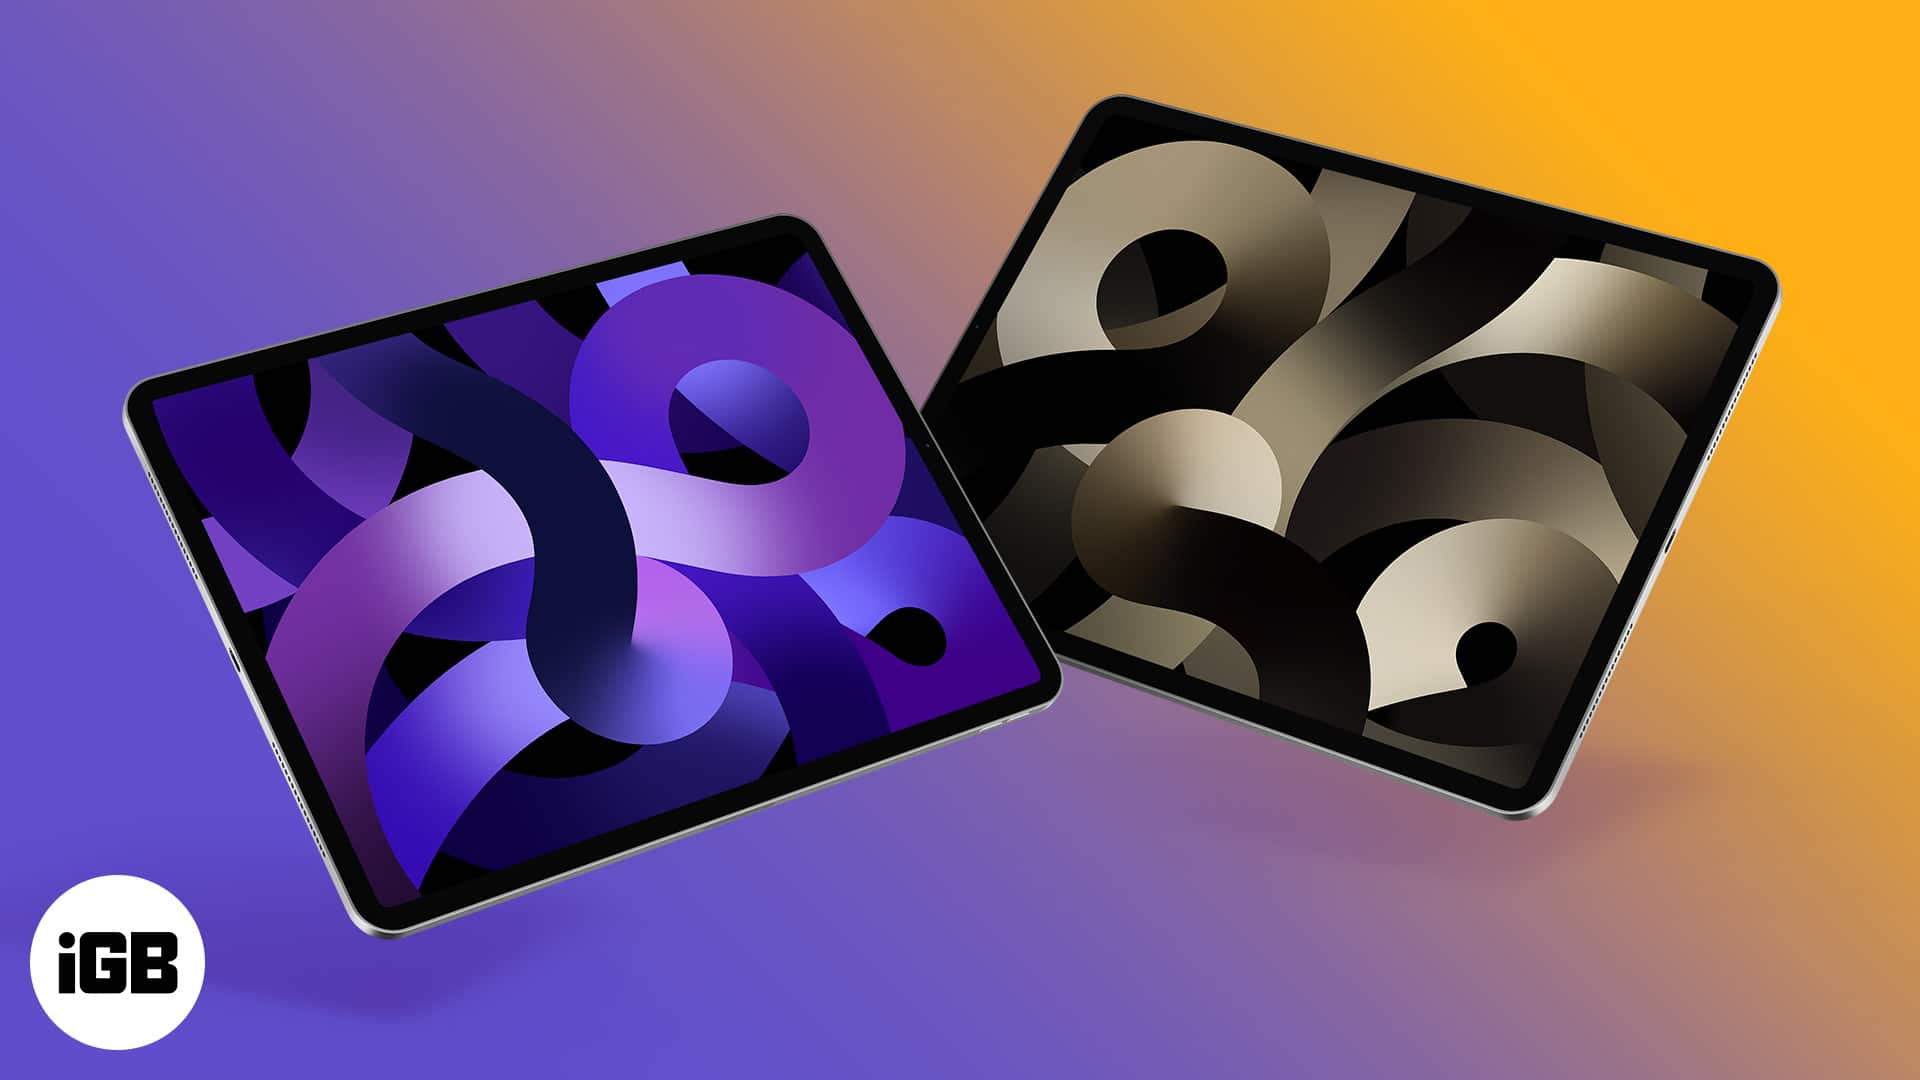 iPad pro black purple theme 4K wallpaper download